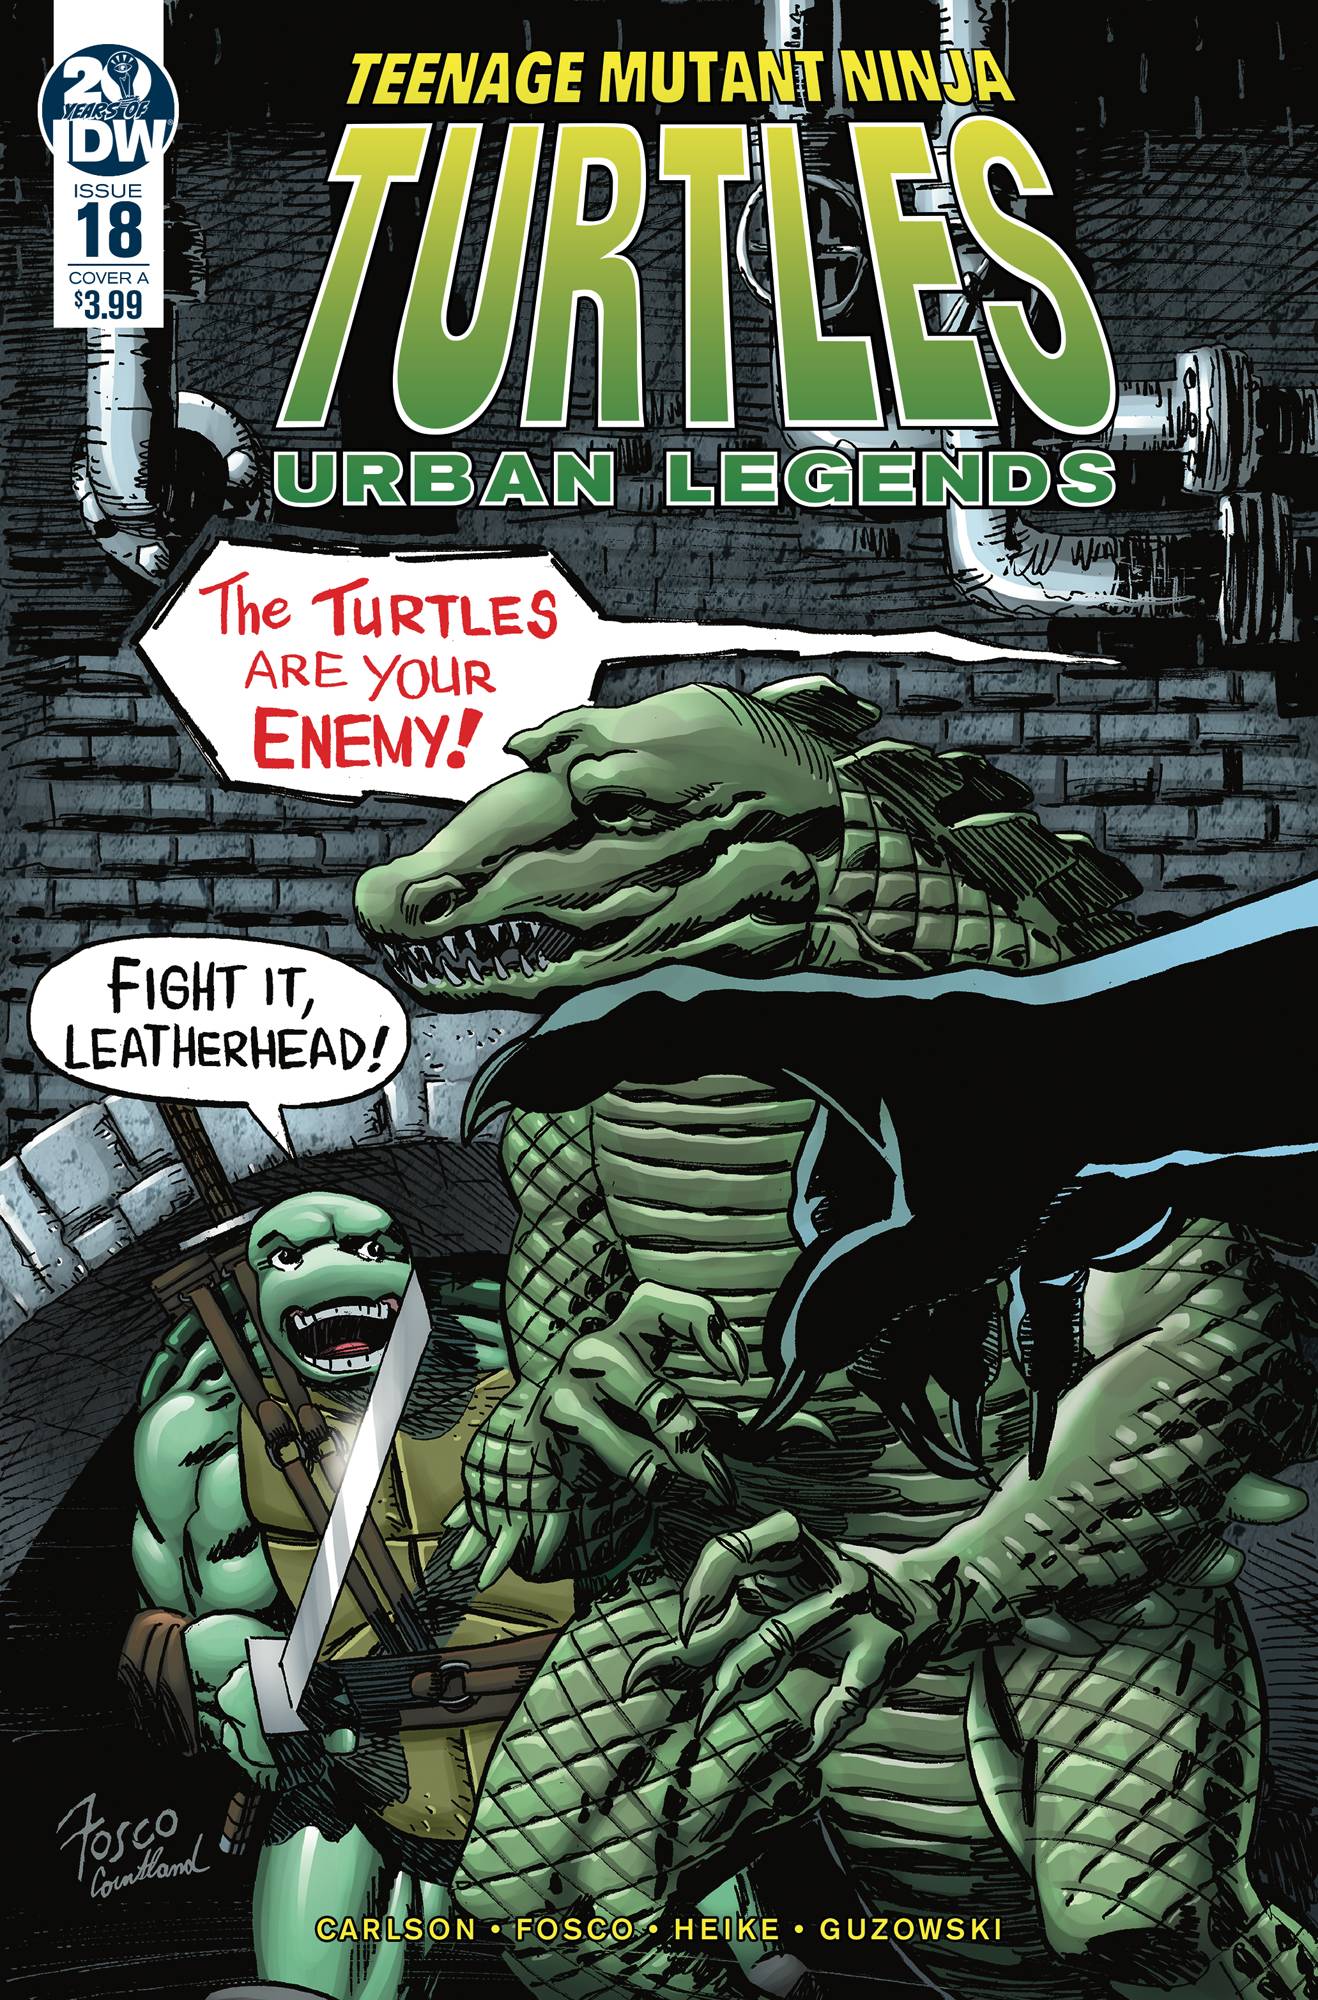 Teenage Mutant Ninja Turtles Urban Legends #18 Cover A Fosco